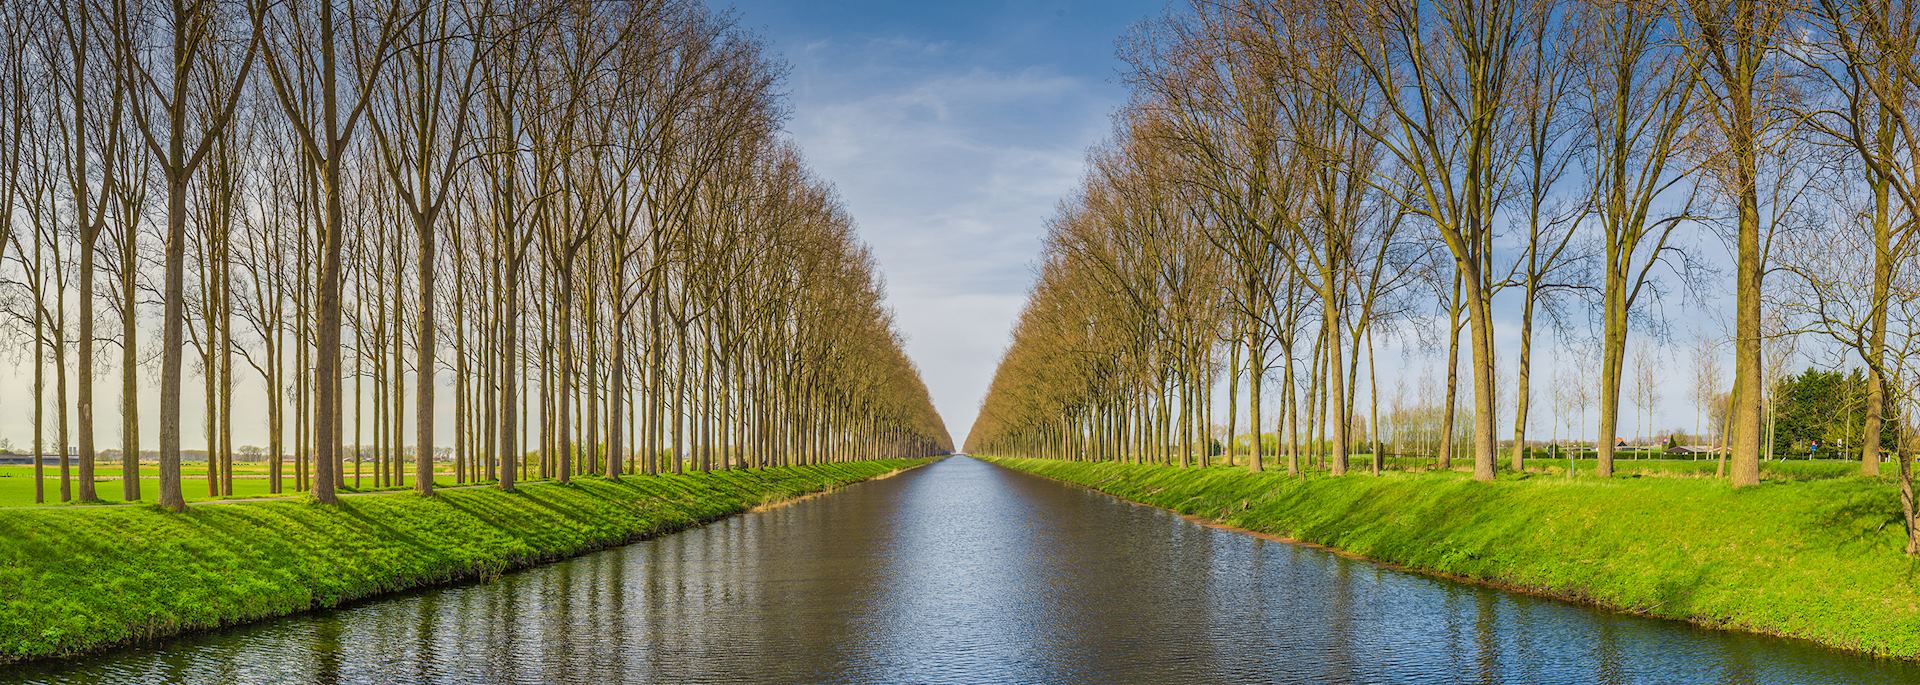 Damme Canal, Flanders, Belgium